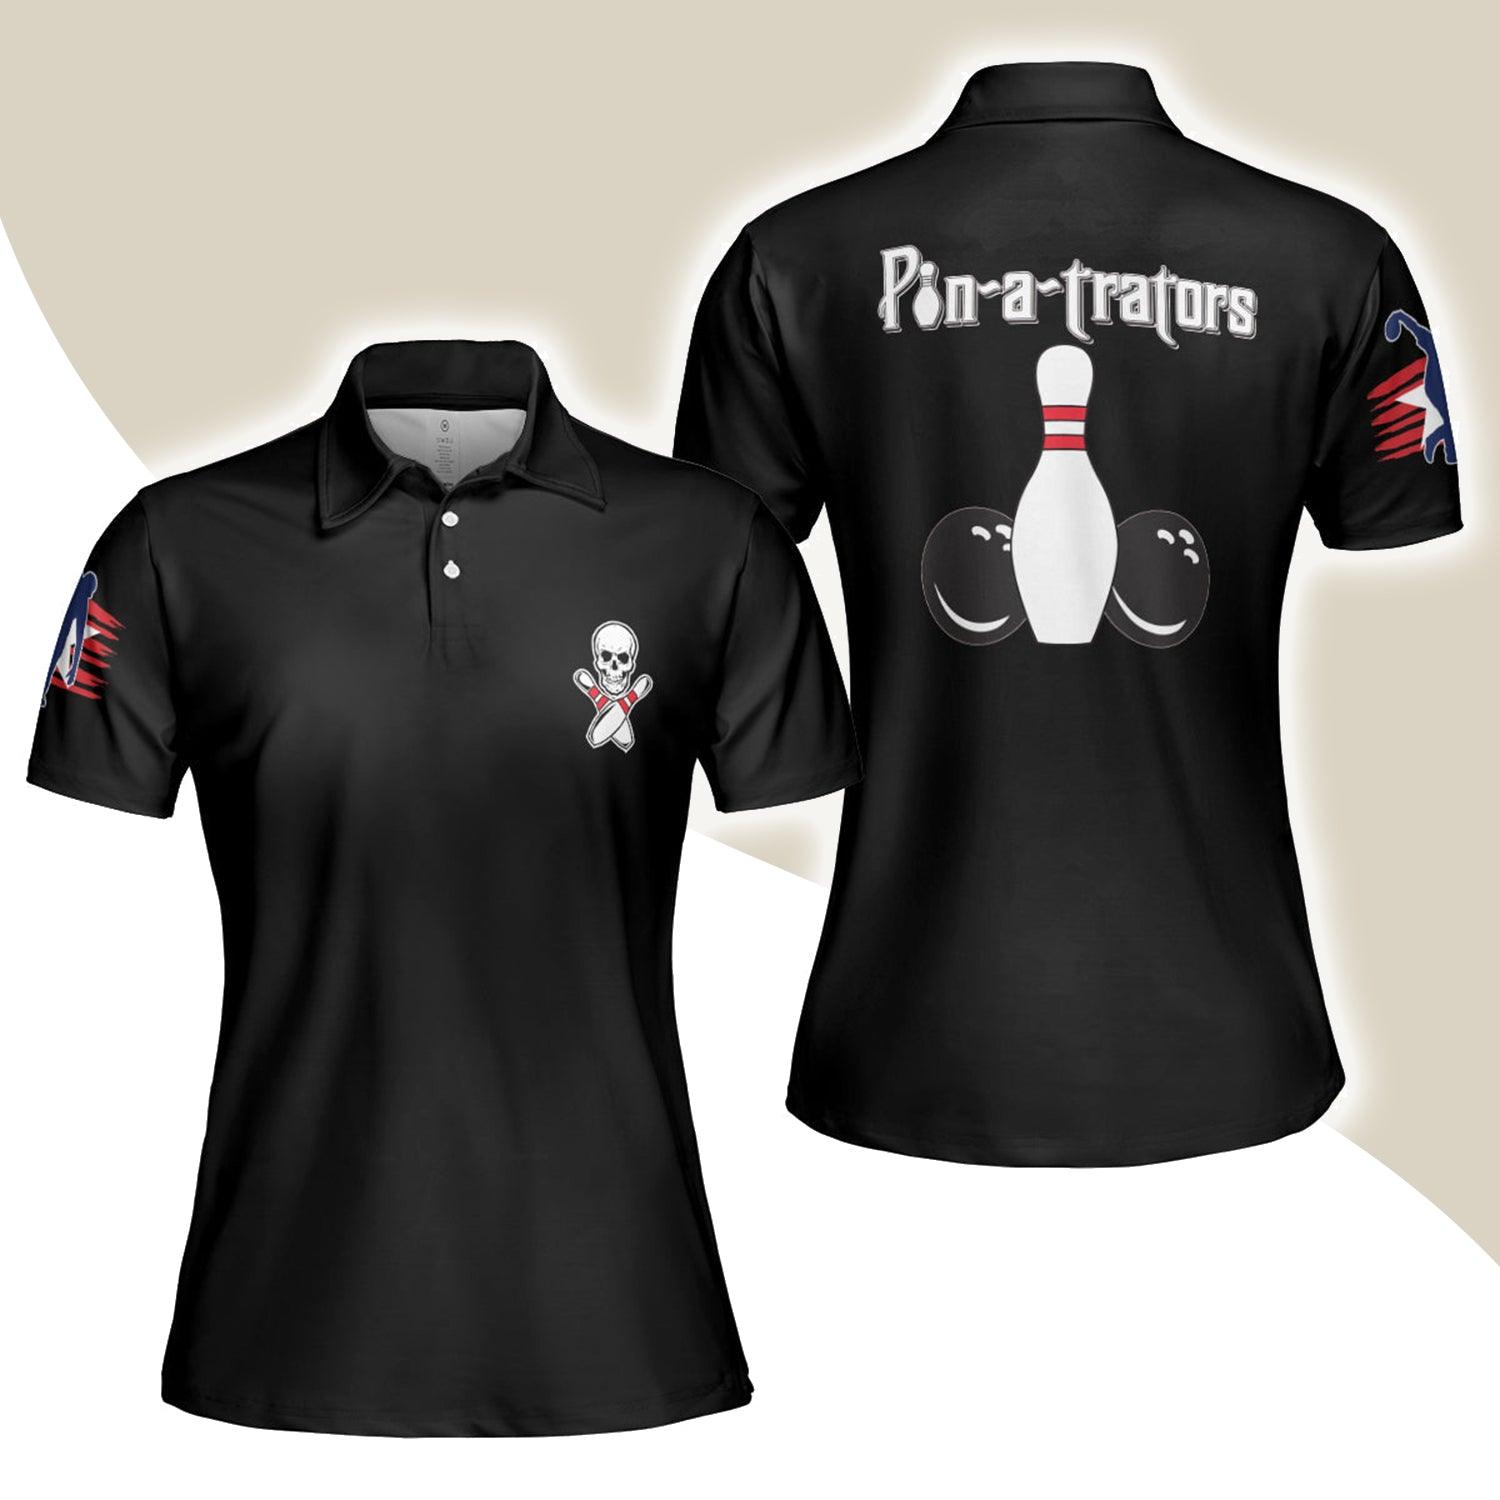 Bowling Women Polo Shirt - Pin a trators Bowling Polo Shirt - Gift For Wife, Family, Bowling Lovers - Best Gift For Women - Amzanimalsgift